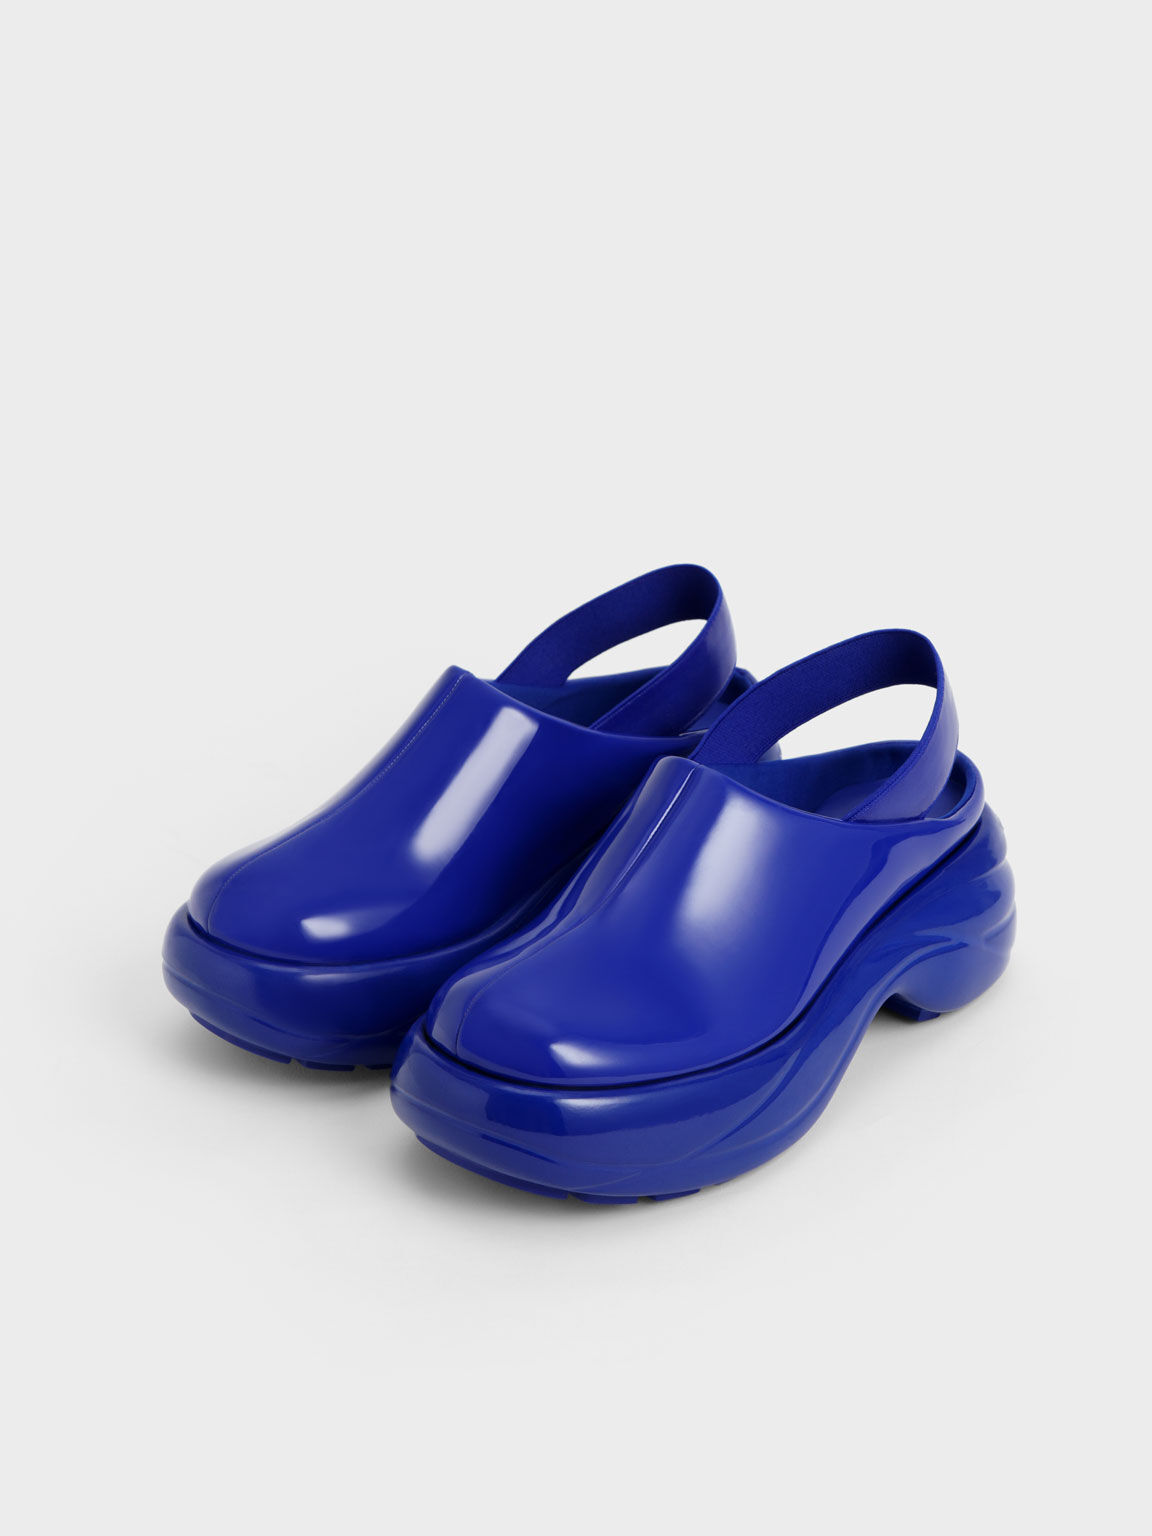 Roony 漆皮厚底懶人鞋, 藍色, hi-res